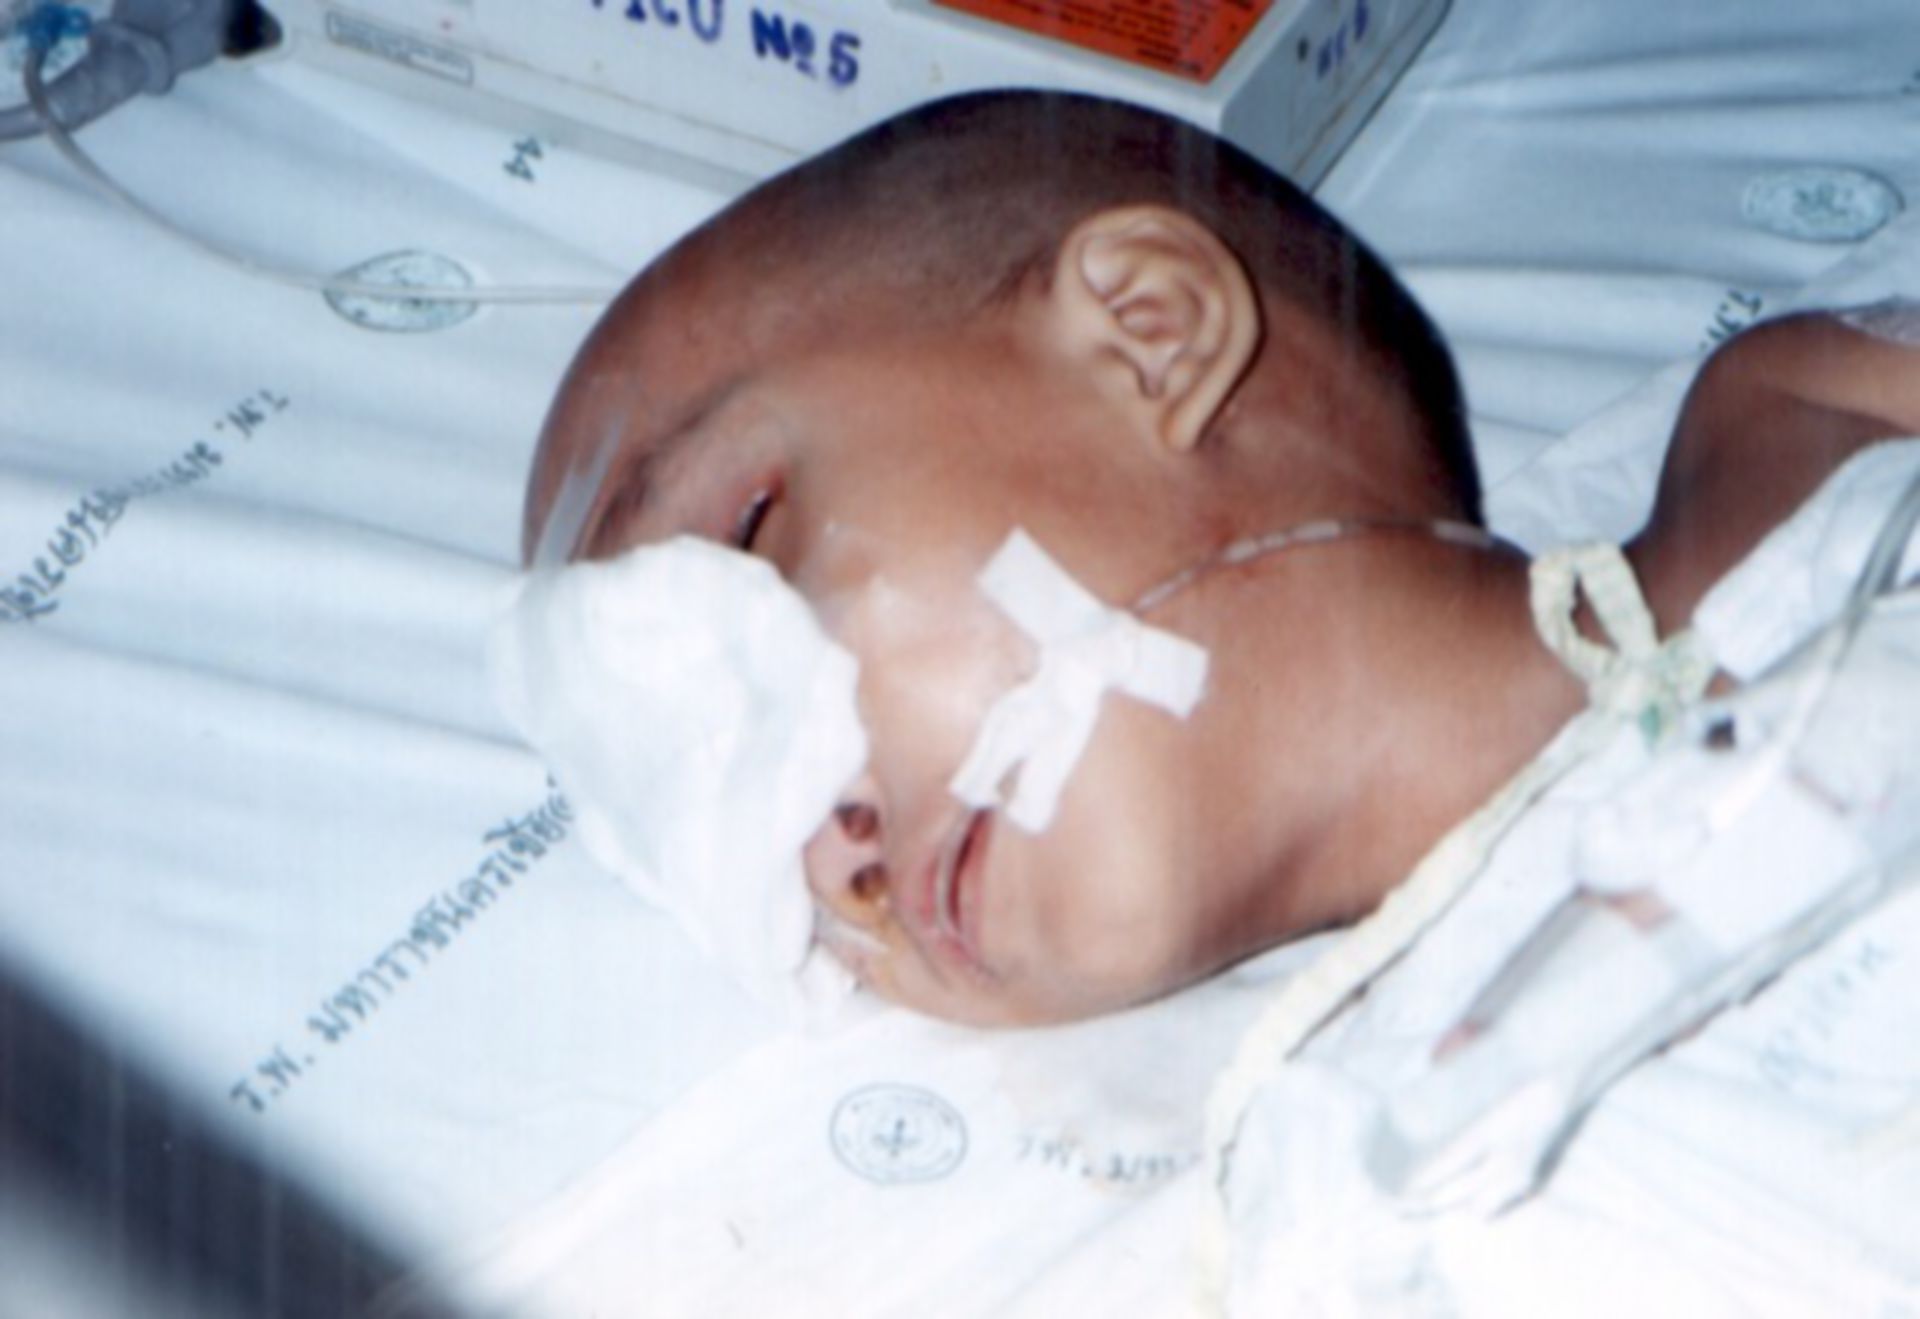 Karen Junge mit Meningomyelozele postoperativ. Er starb an Meningitis.